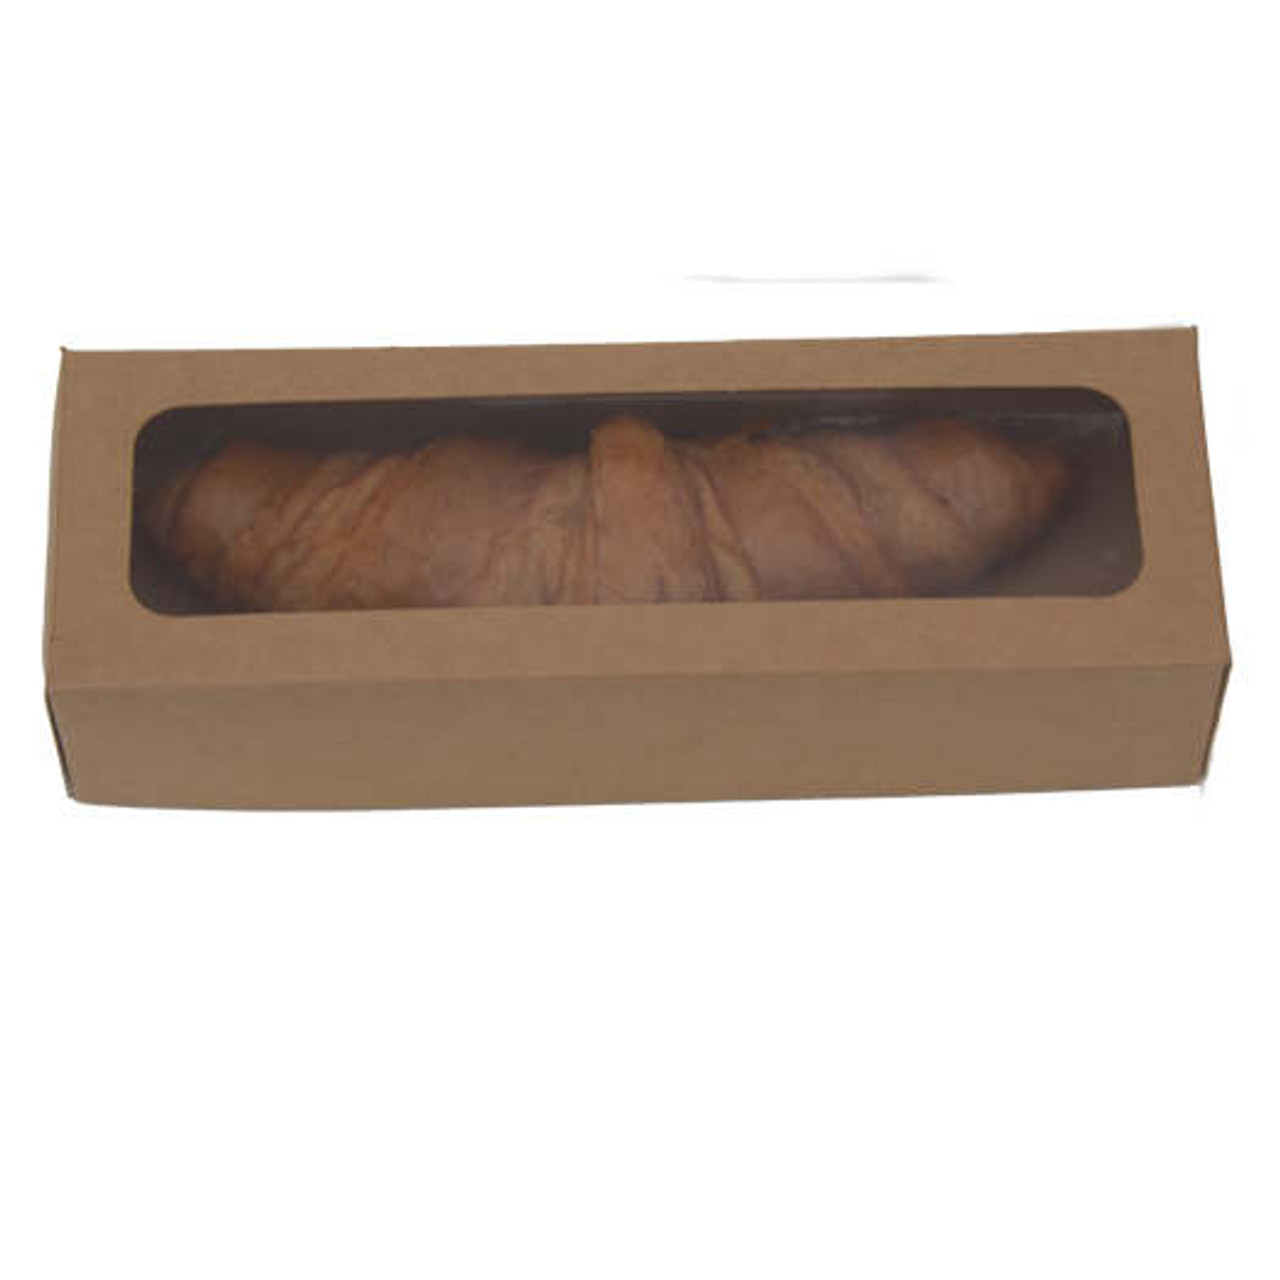 Pack x 50 Cardboard 3 Muffin Kraft Boxes 235 x 80 x 50mm